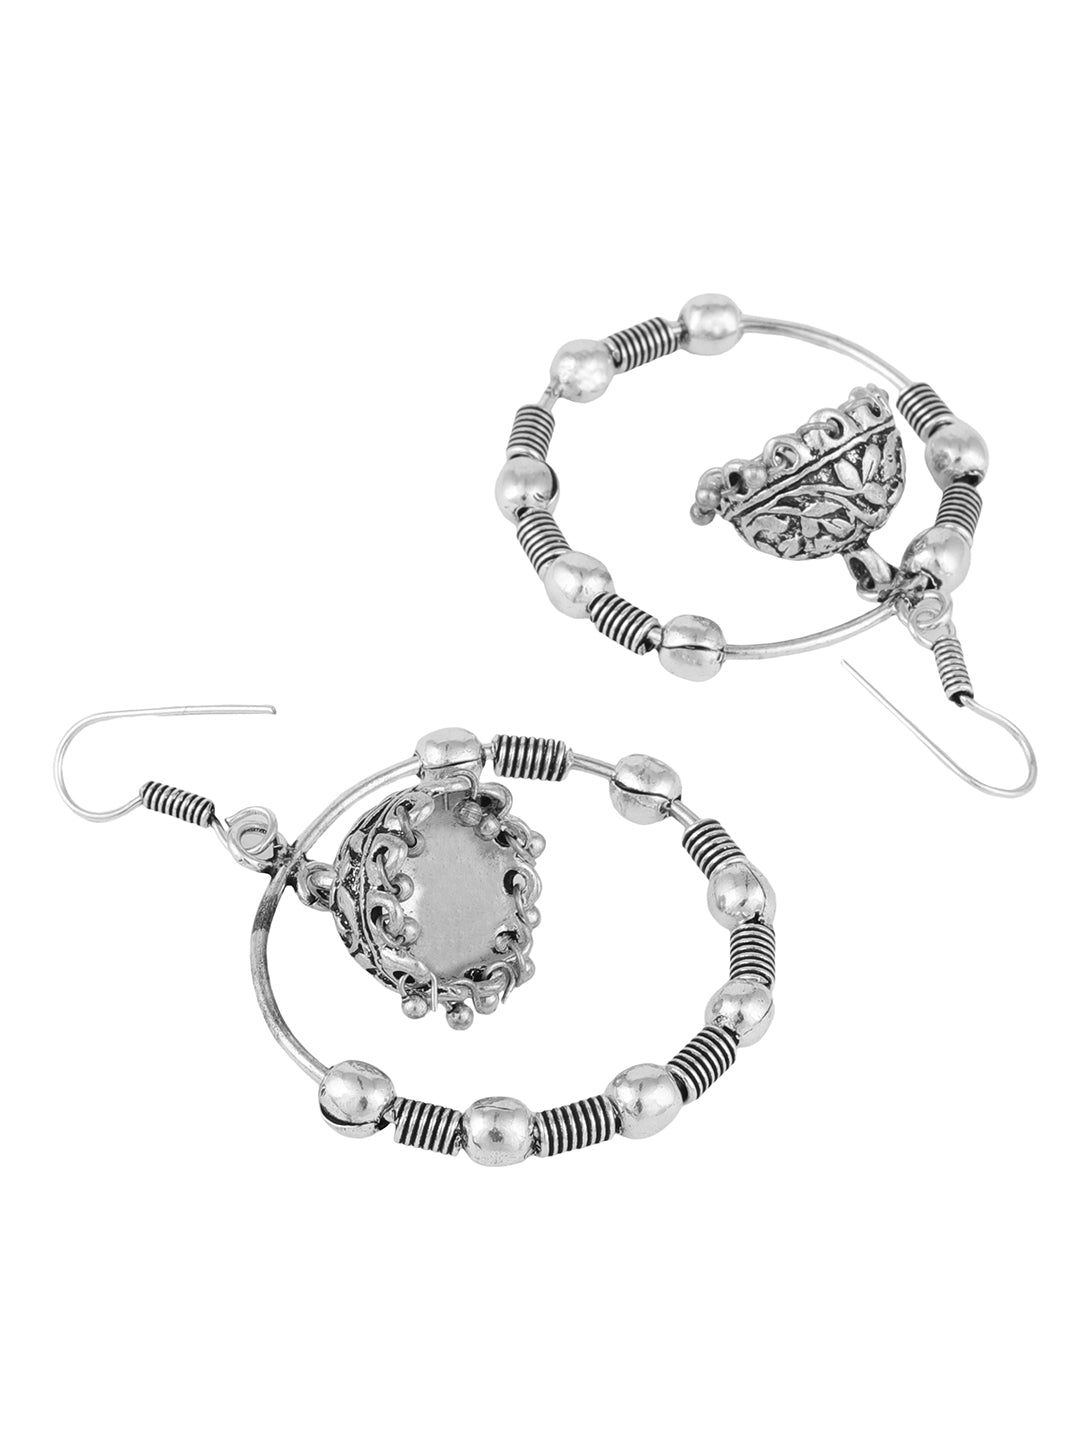 Women's Silver Tone Oxidised Silver Jhumka Chandbali Earring - Anikas Creation